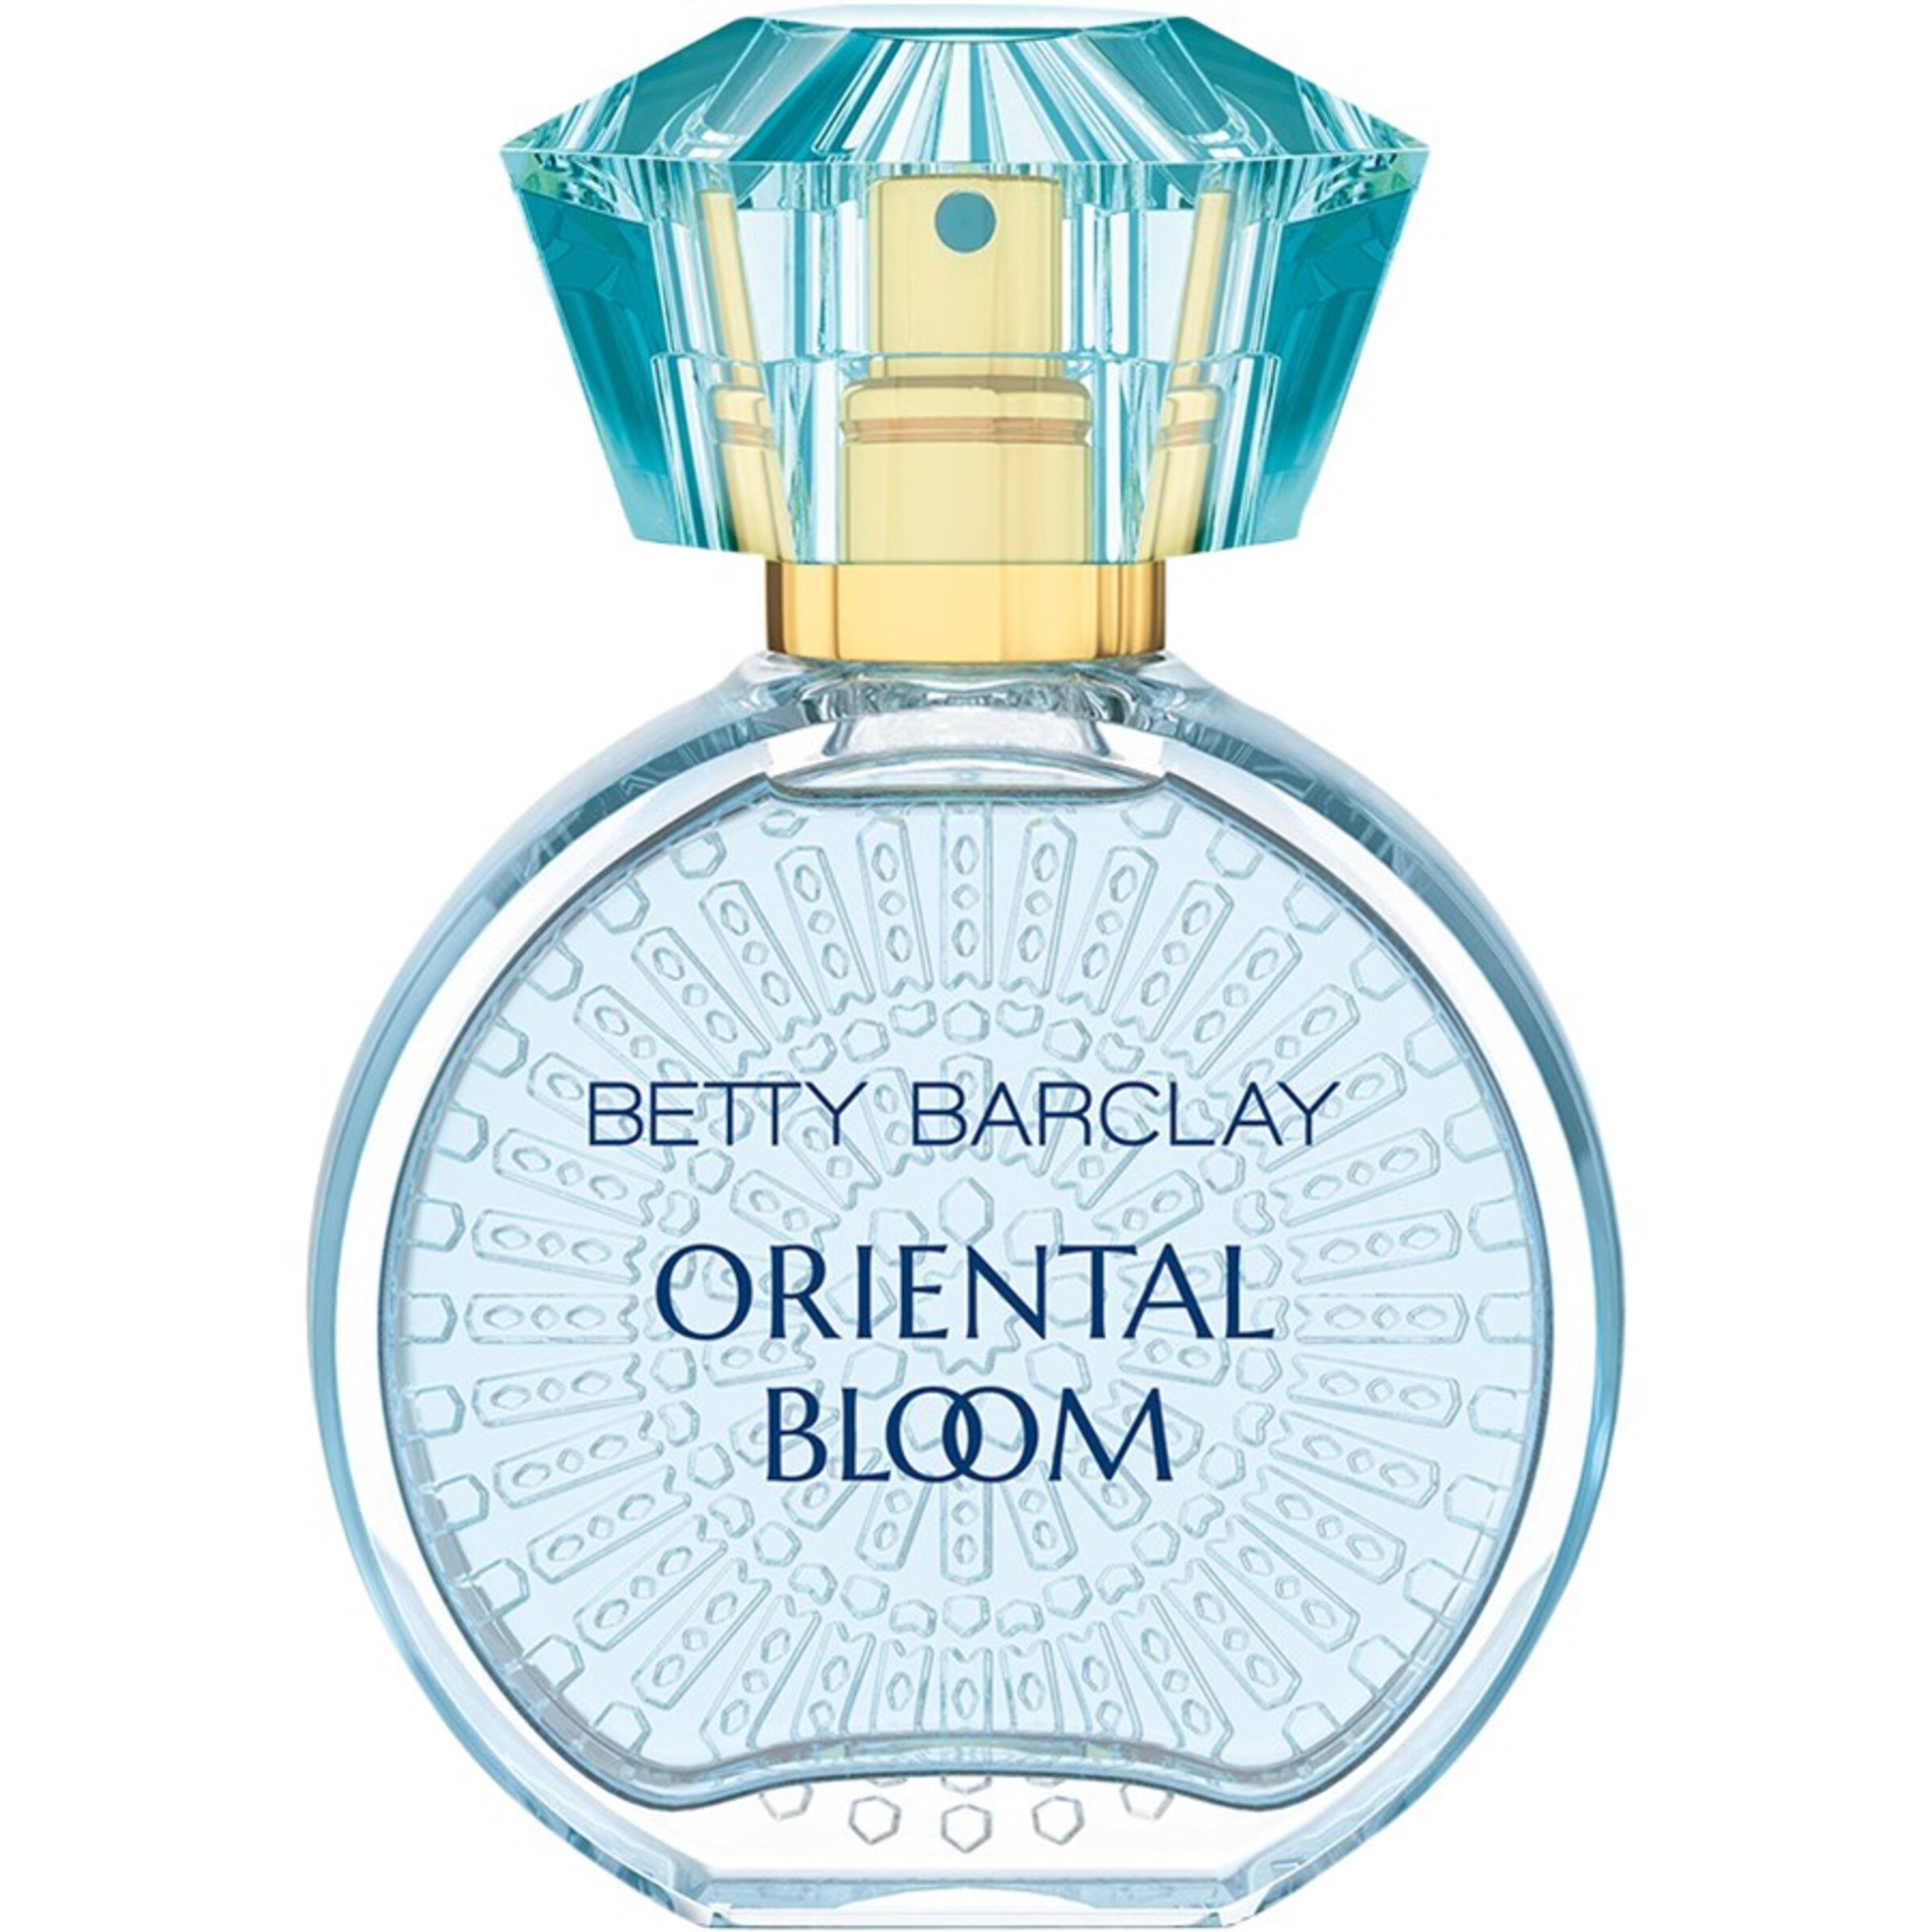 Betty Barclay Parfüm Bloom in 